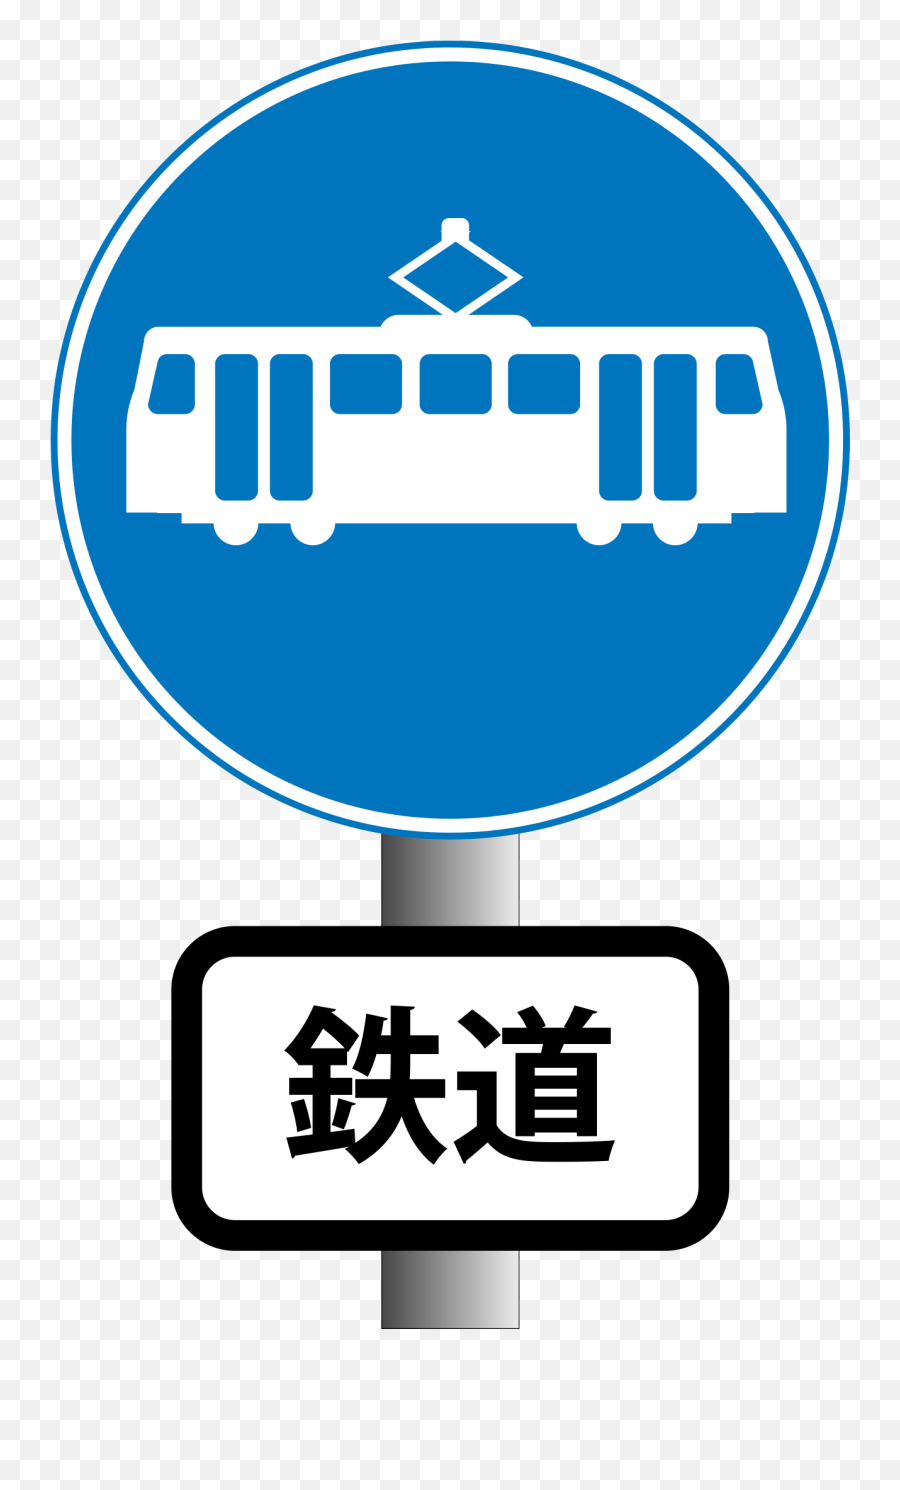 Filetetsudo Tram Signsvg - Wikipedia Tram Sign Png,Oshawott Icon